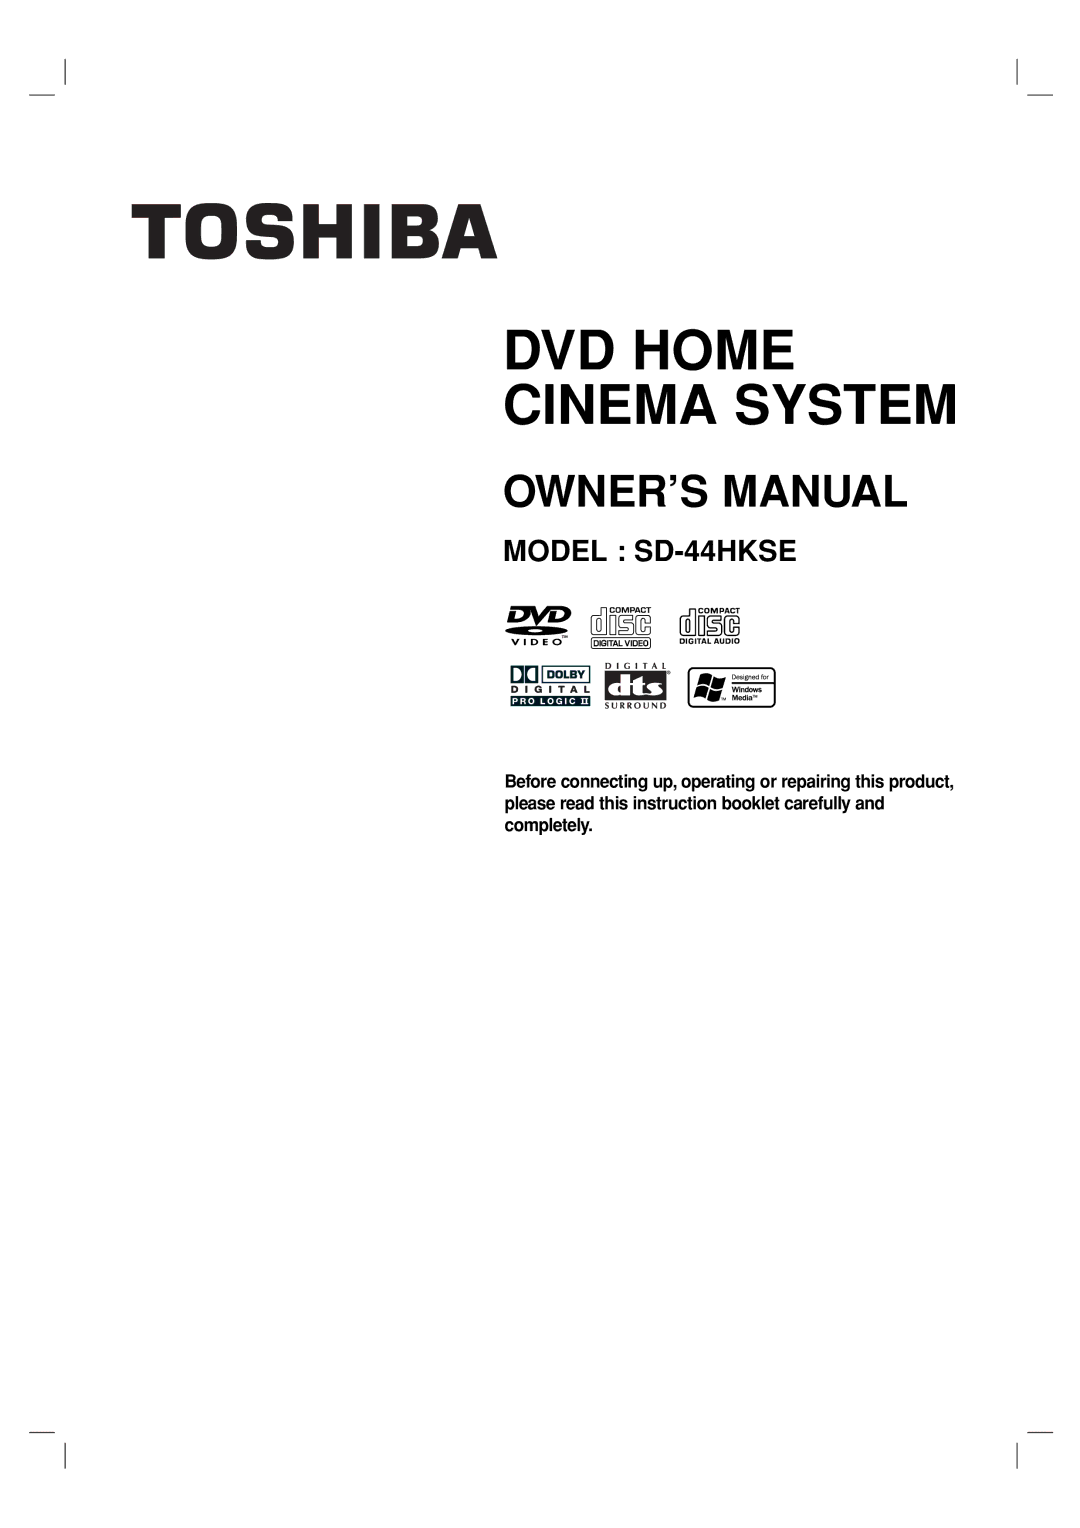 Toshiba SD-44HKSE owner manual DVD Home Cinema System 